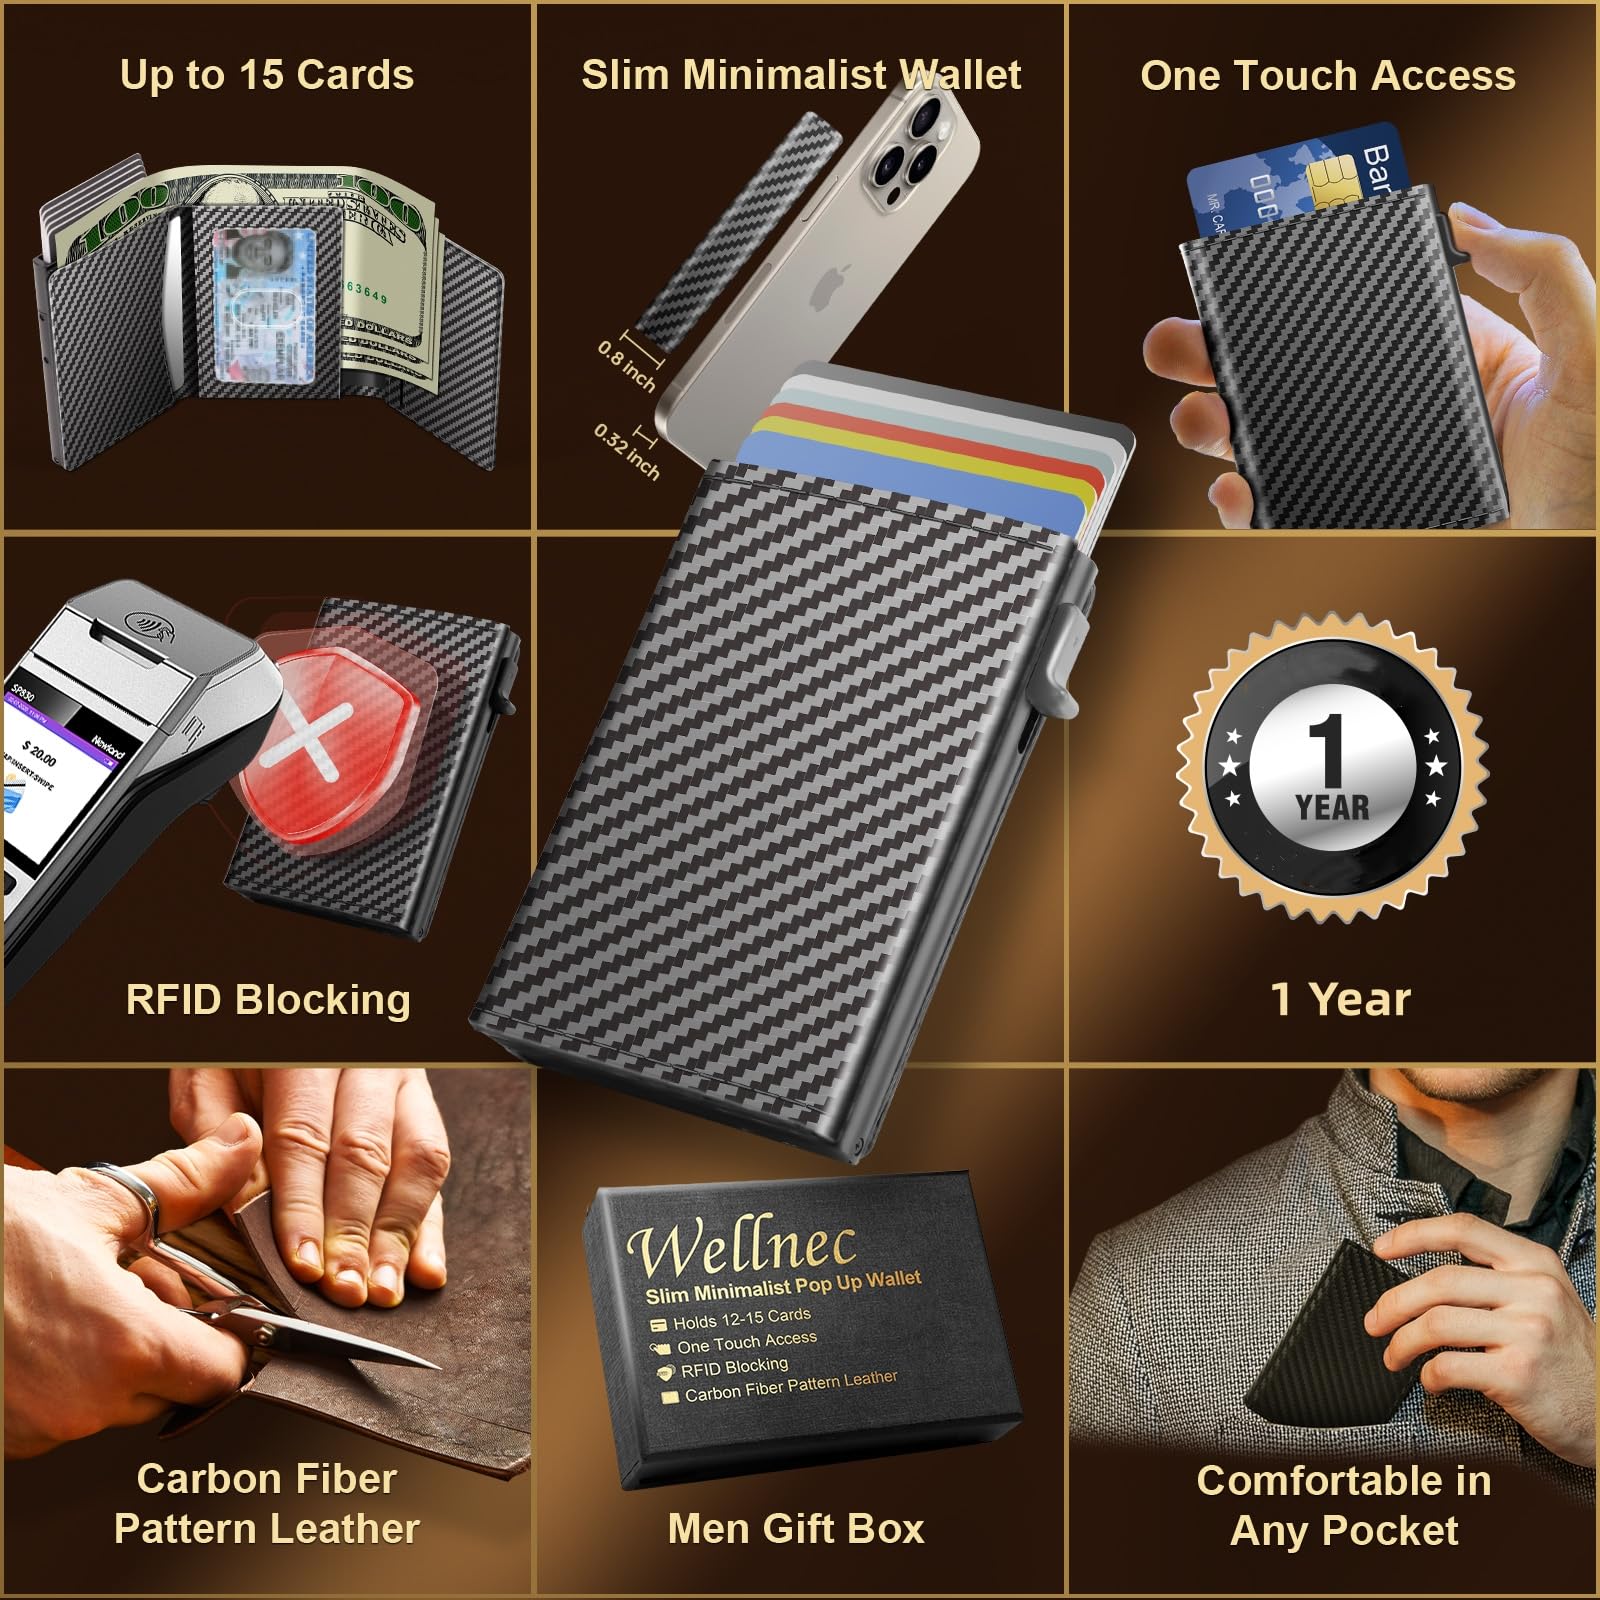 WELLNEC Mens Pop Up Wallet for Credit Card Holder - Wallet for Men with ID Window and 12-15 Cards Capacity, Smart Wallet RFID Blocking, Front Pocket, Cash Slot,Carbon Fiber Leather